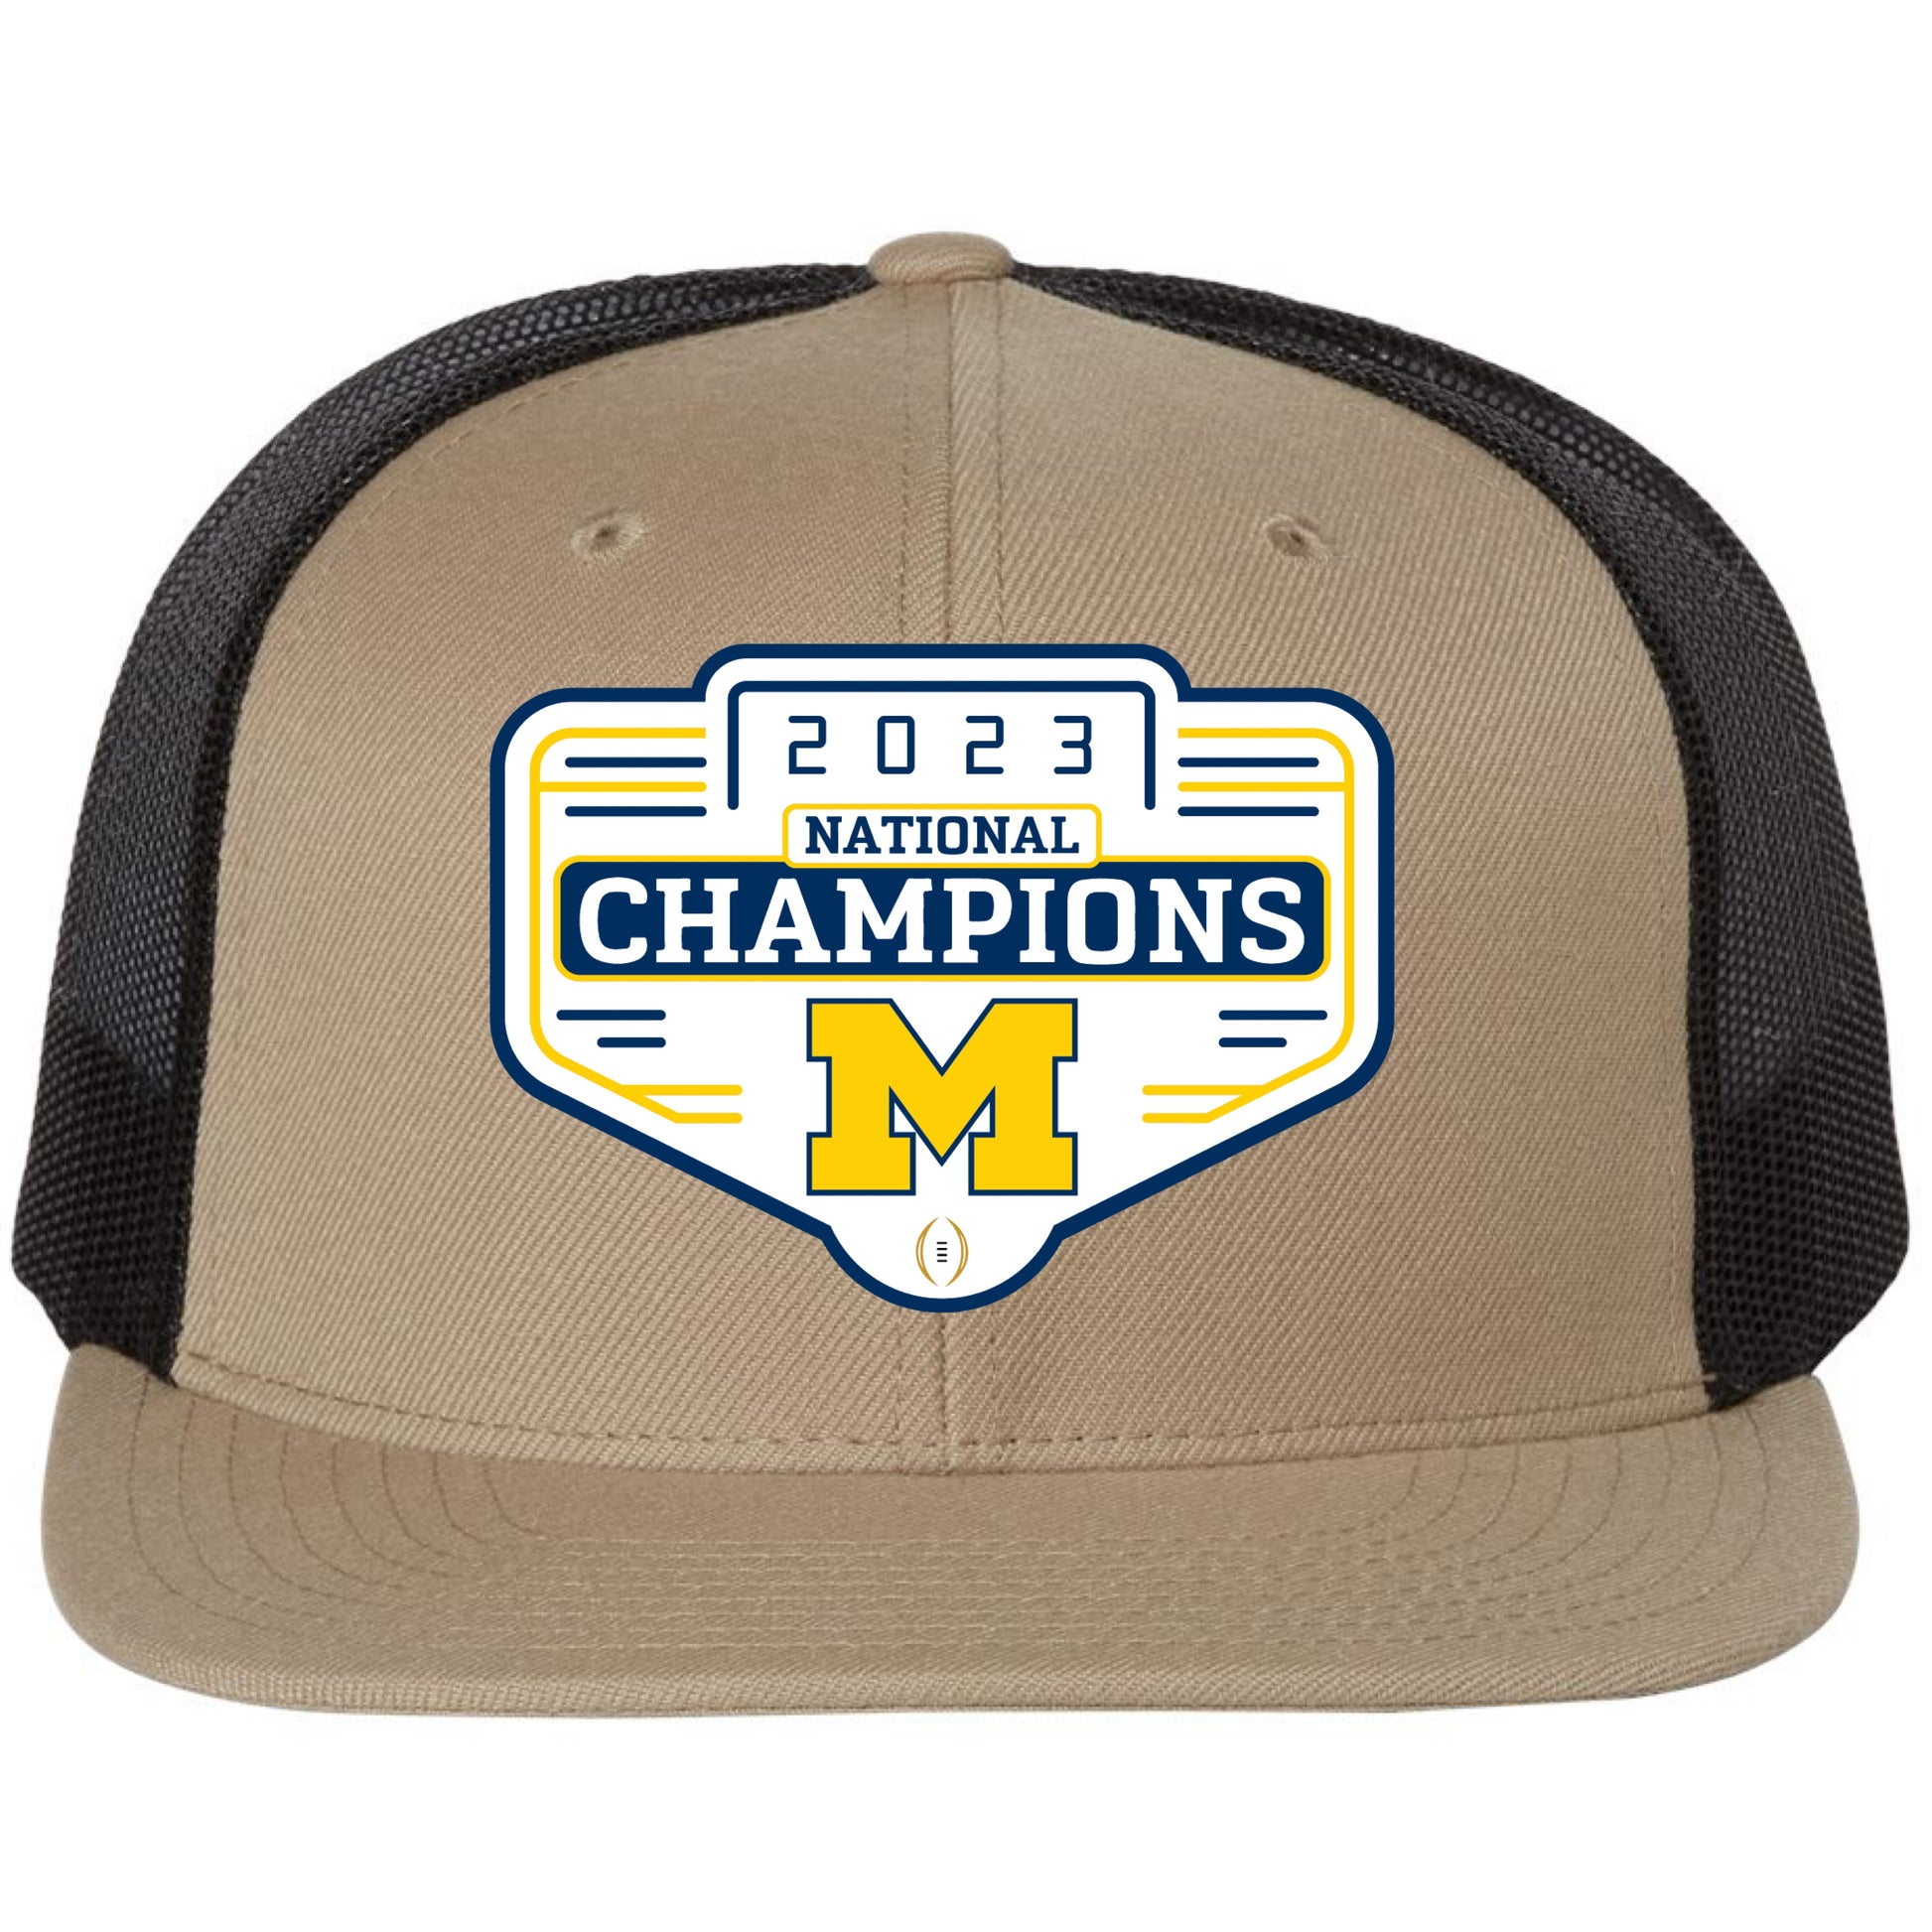 Michigan Wolverines 2023 National Champions Wool Blend Flat Bill Hat- Tan/ Black - Ten Gallon Hat Co.